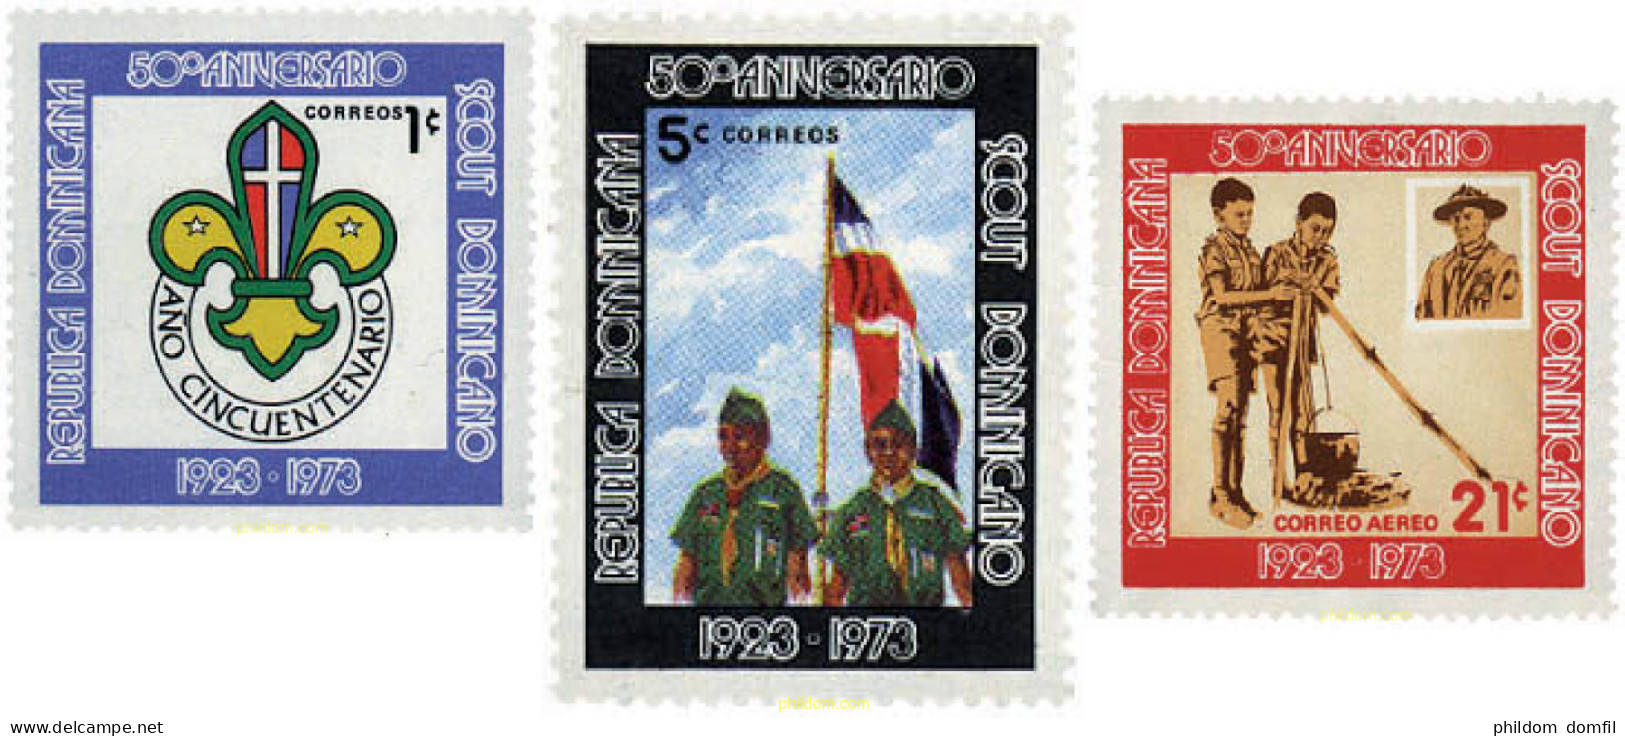 38792 MNH DOMINICANA 1973 50 ANIVERSARIO DEL ESCULTISMO EN LA REPUBLICA DOMINICANA - Dominicaine (République)